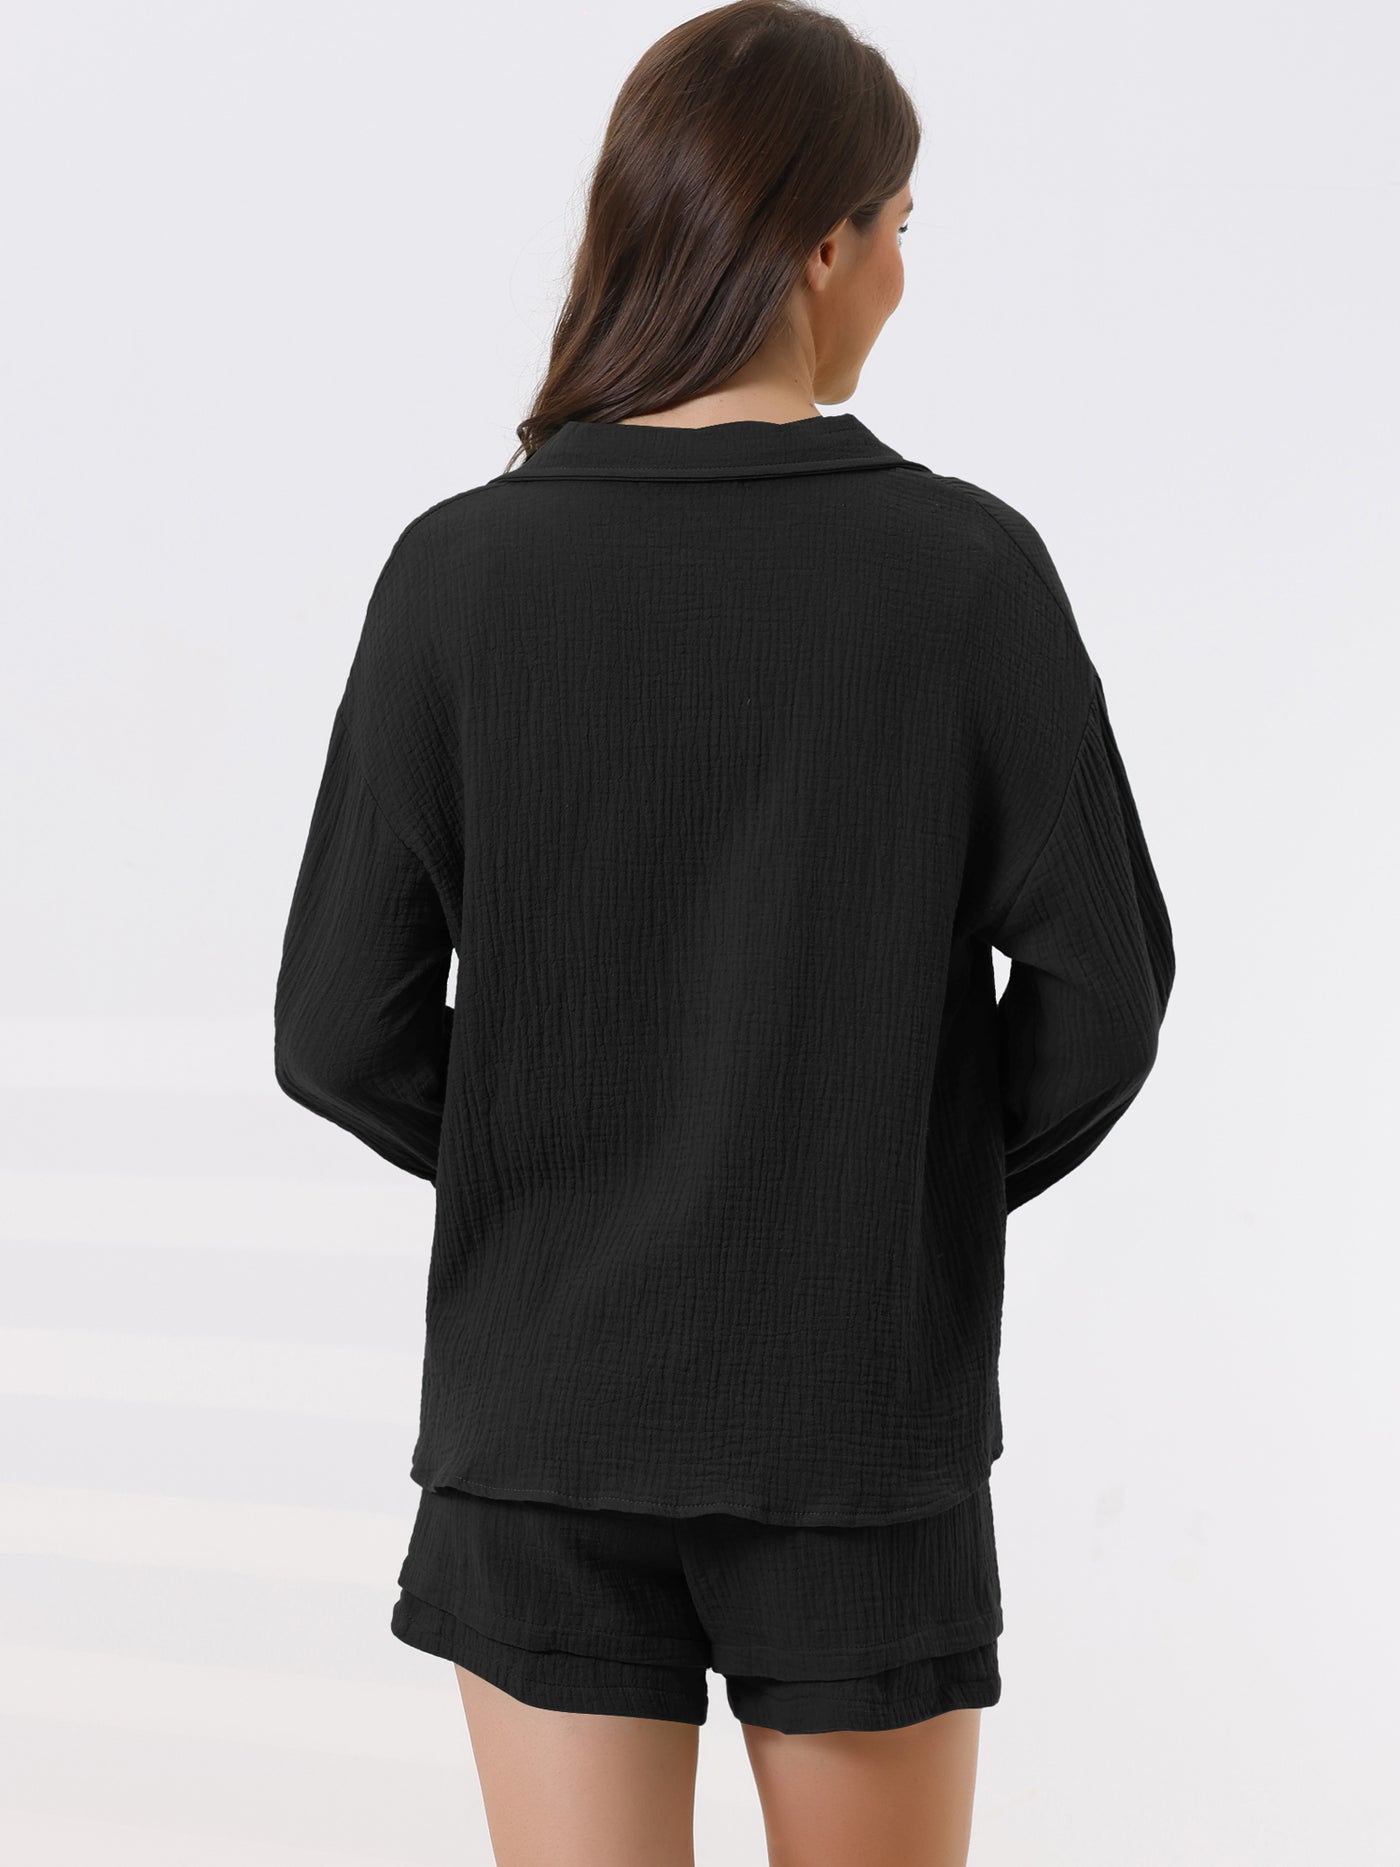 Bublédon Womens Sleepwear Button Down Long Sleeve Shirt with Shorts Casual Lounge Sets